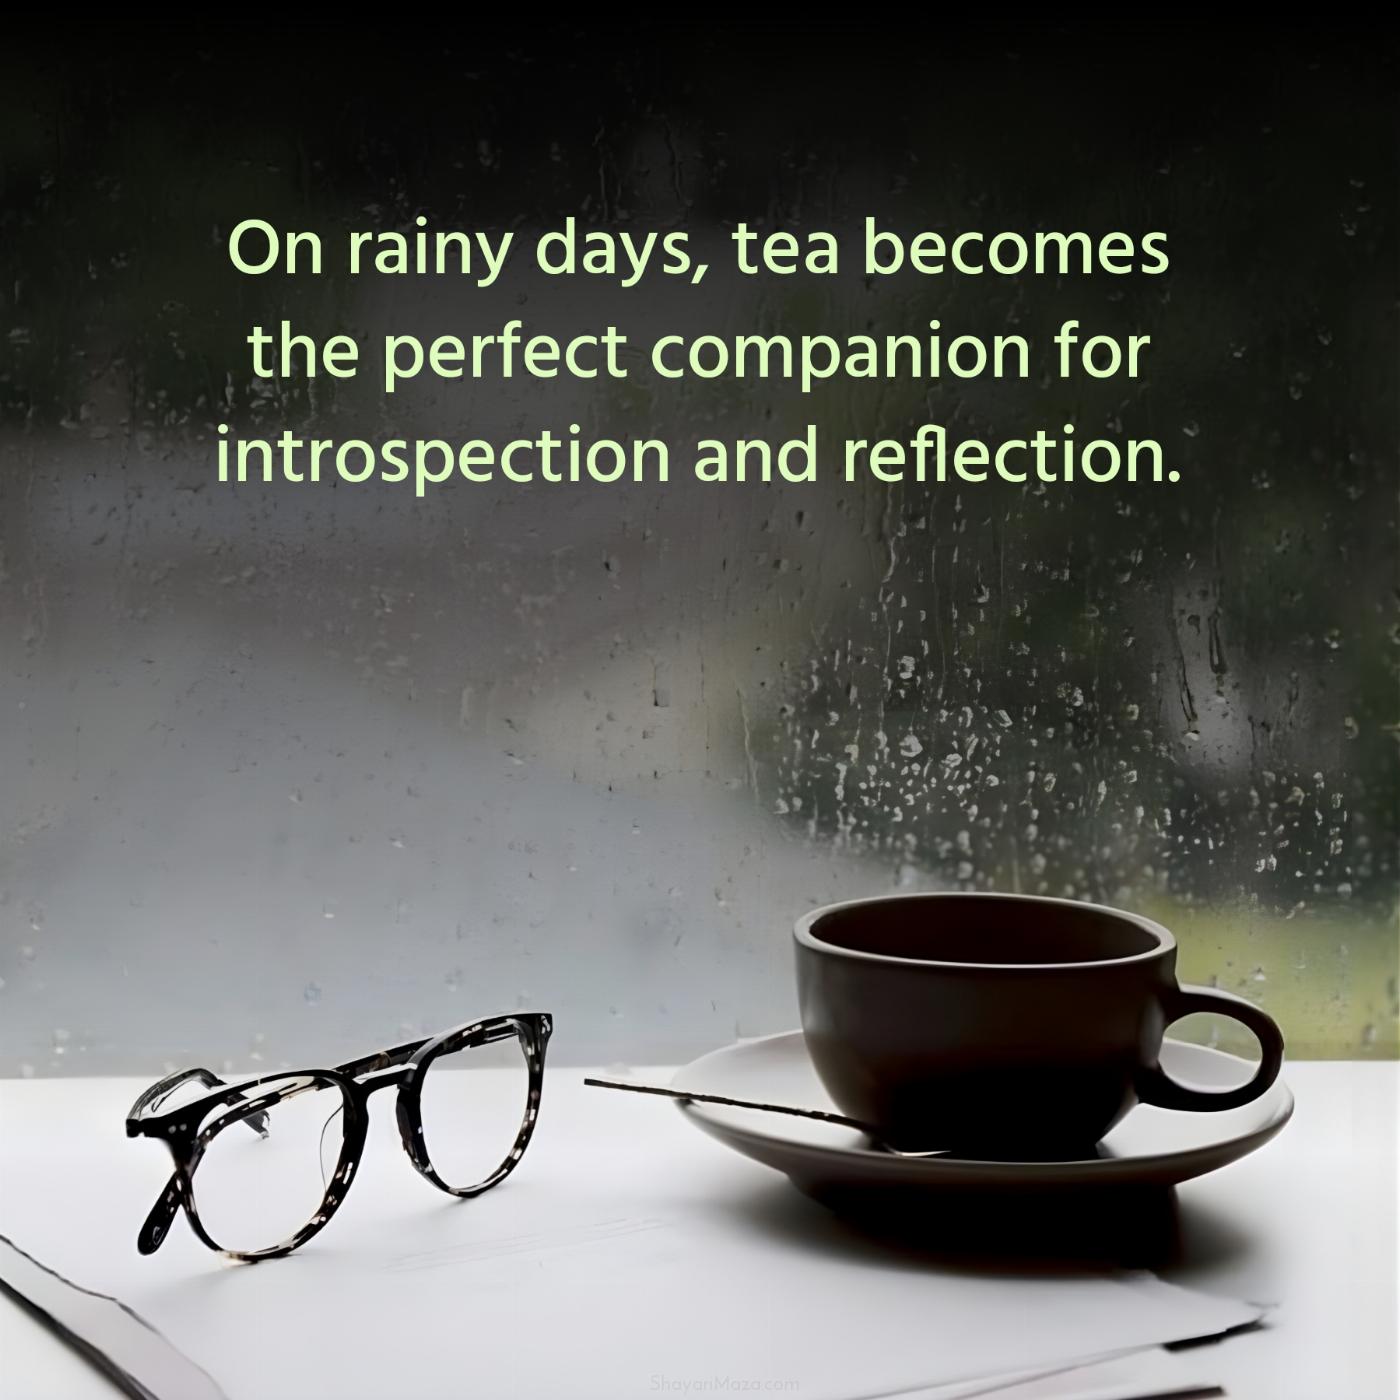 On rainy days tea becomes the perfect companion